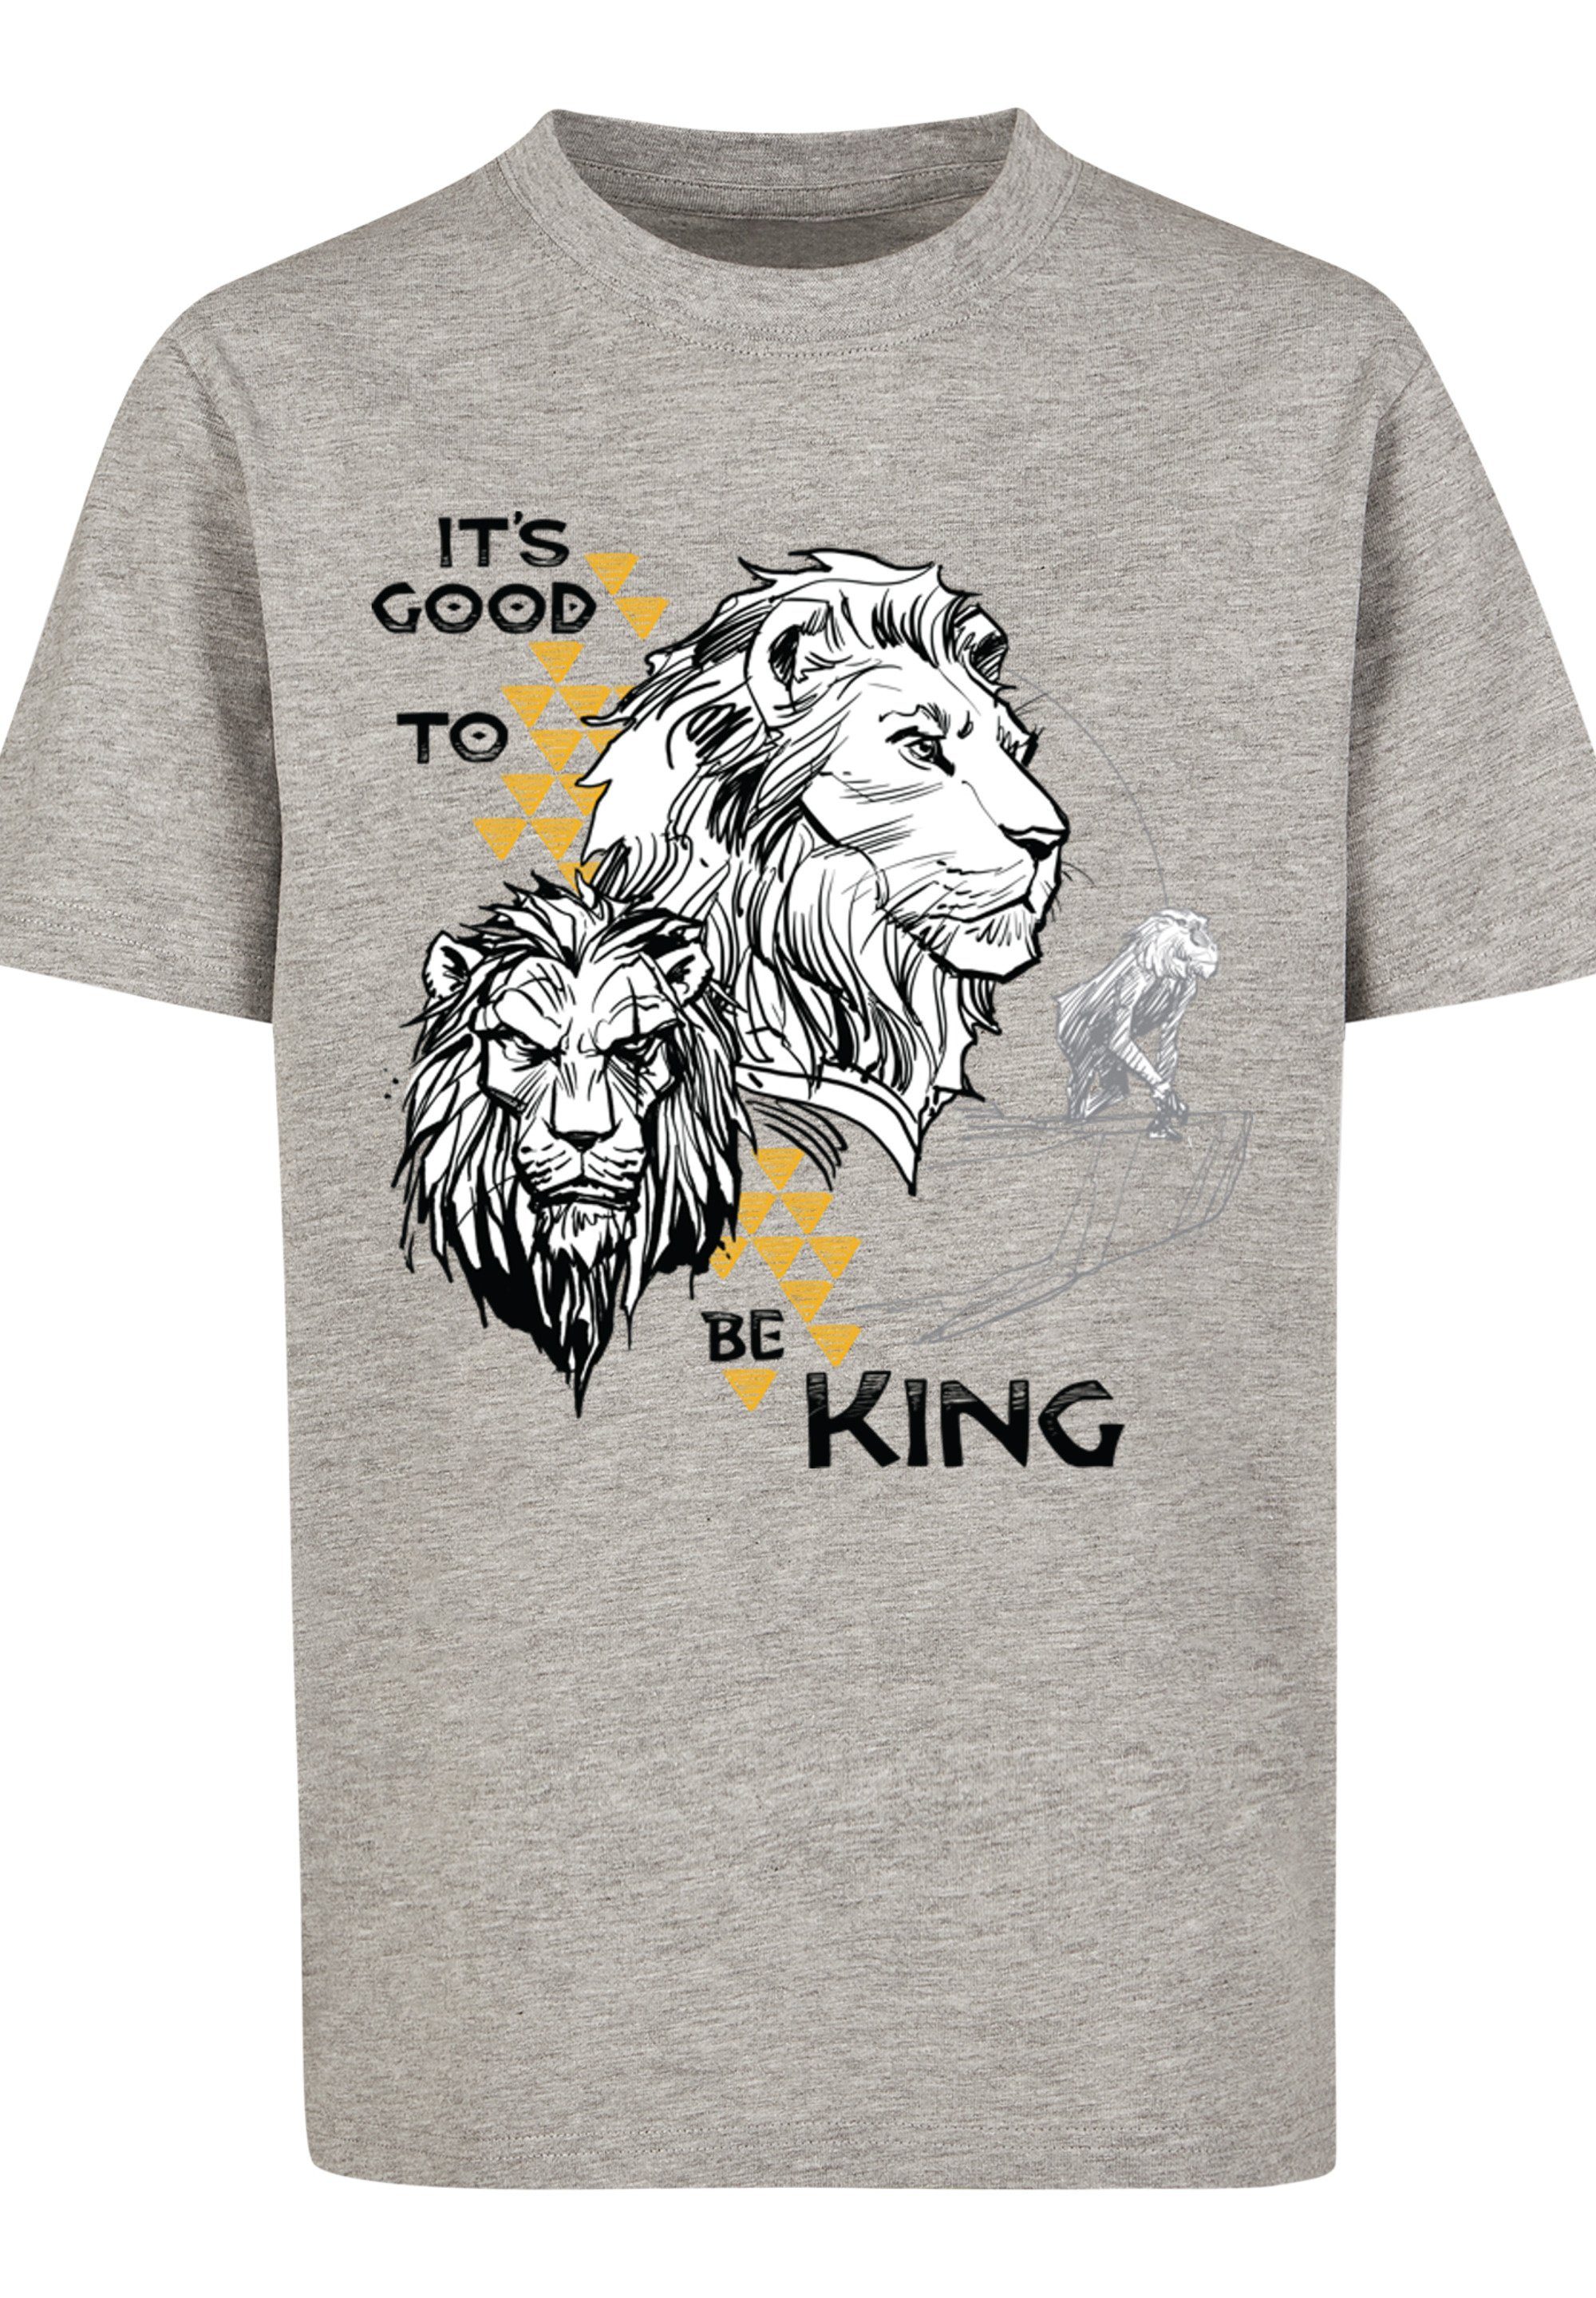 heather Disney König der Print To T-Shirt grey Good It's Löwen Movie Be King F4NT4STIC